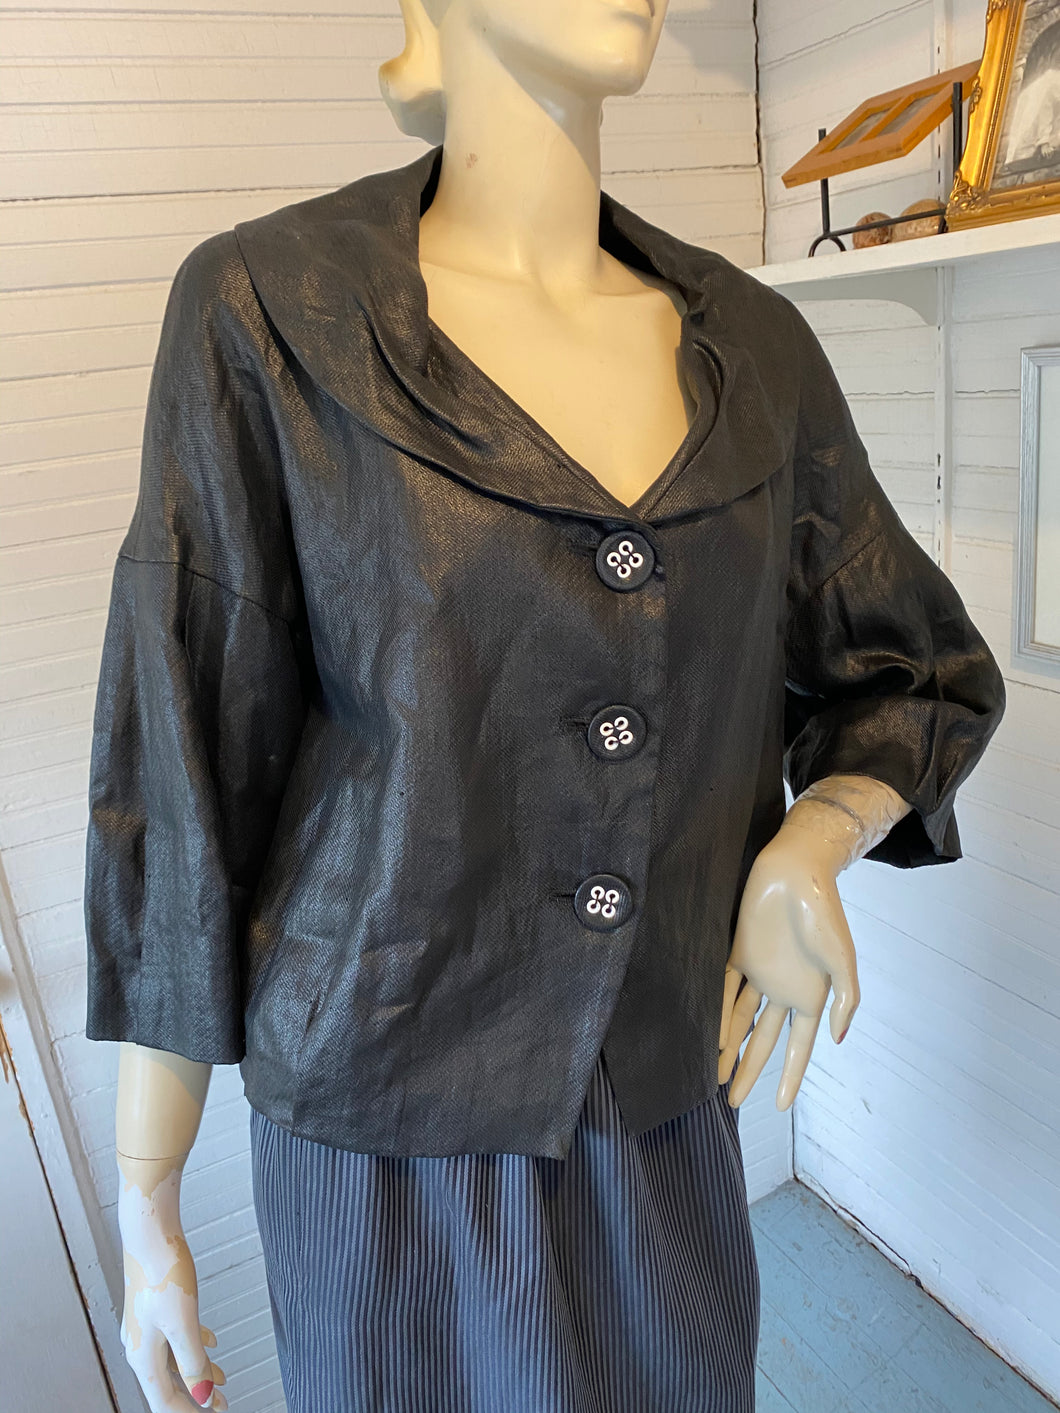 Ischiko by Oska Black Linen Boxy Jacket, size 8